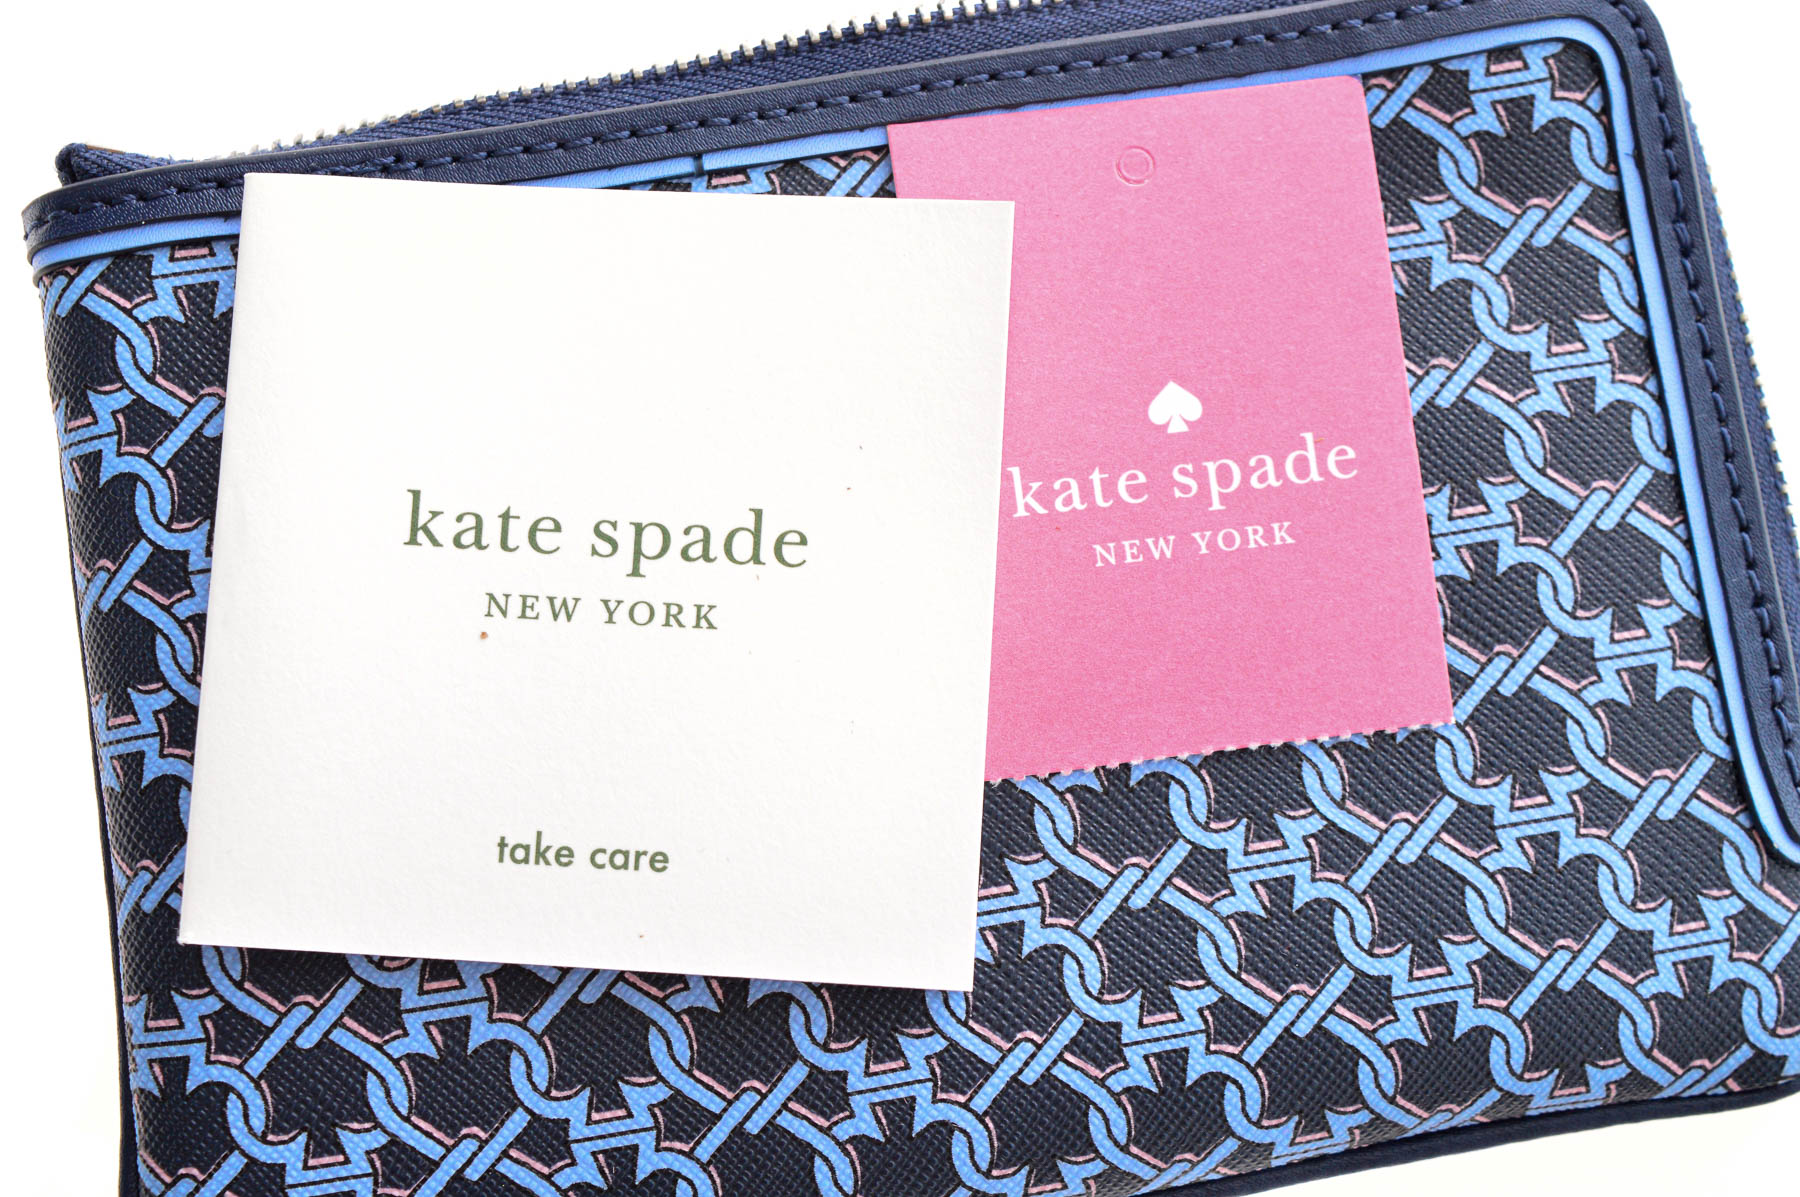 Women's Wallet - Kate spade NEW YORK - 3